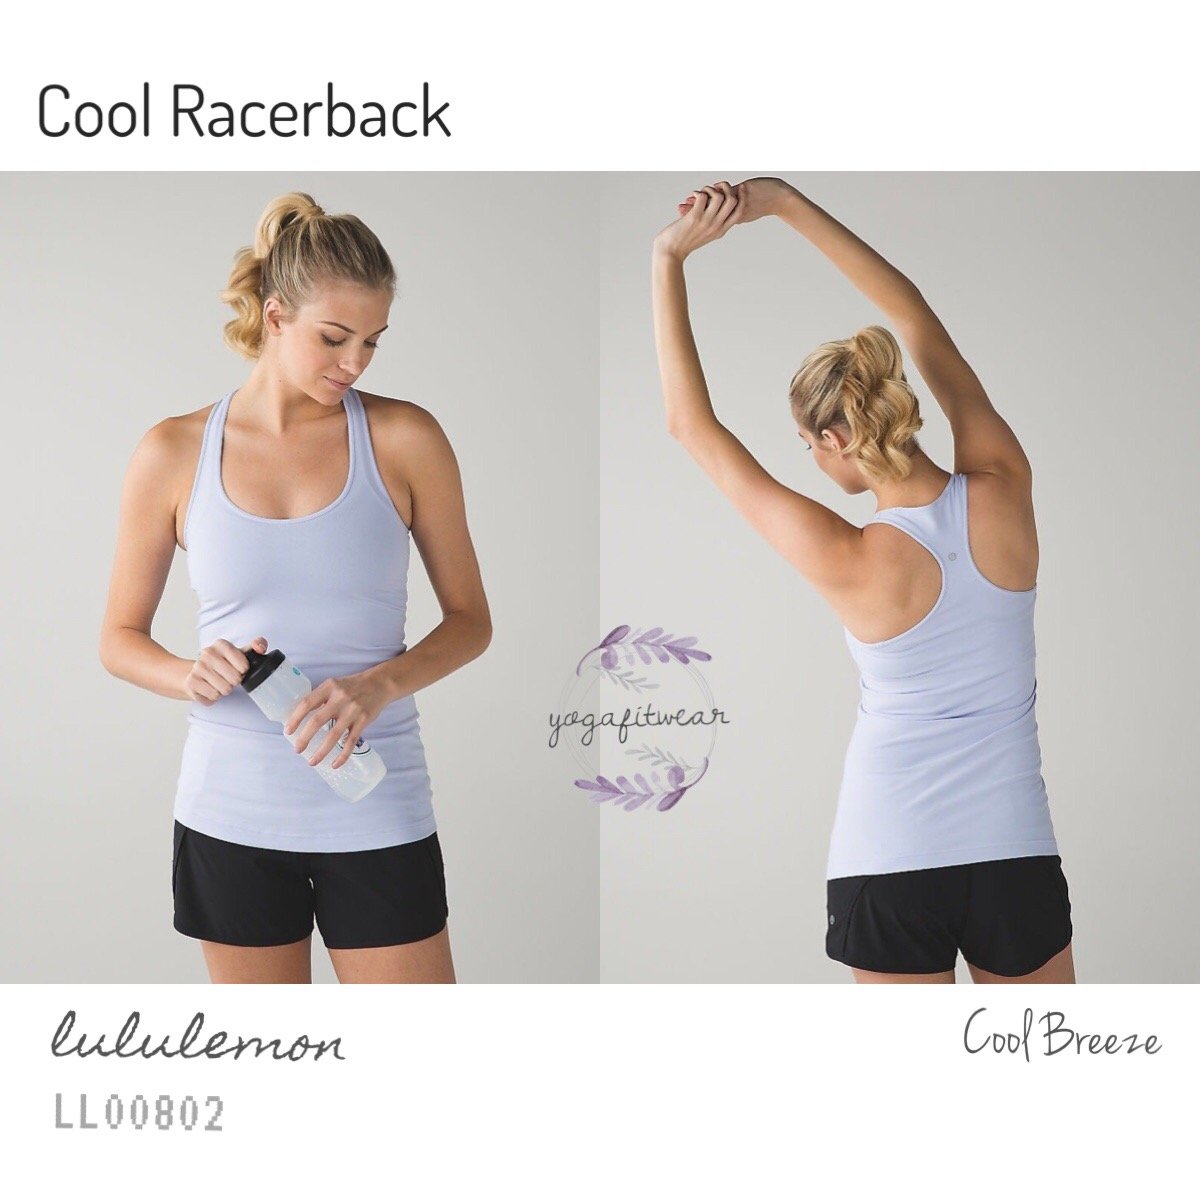 Lululemon - Cool Racerback (Cool Breeze) (LL00802)